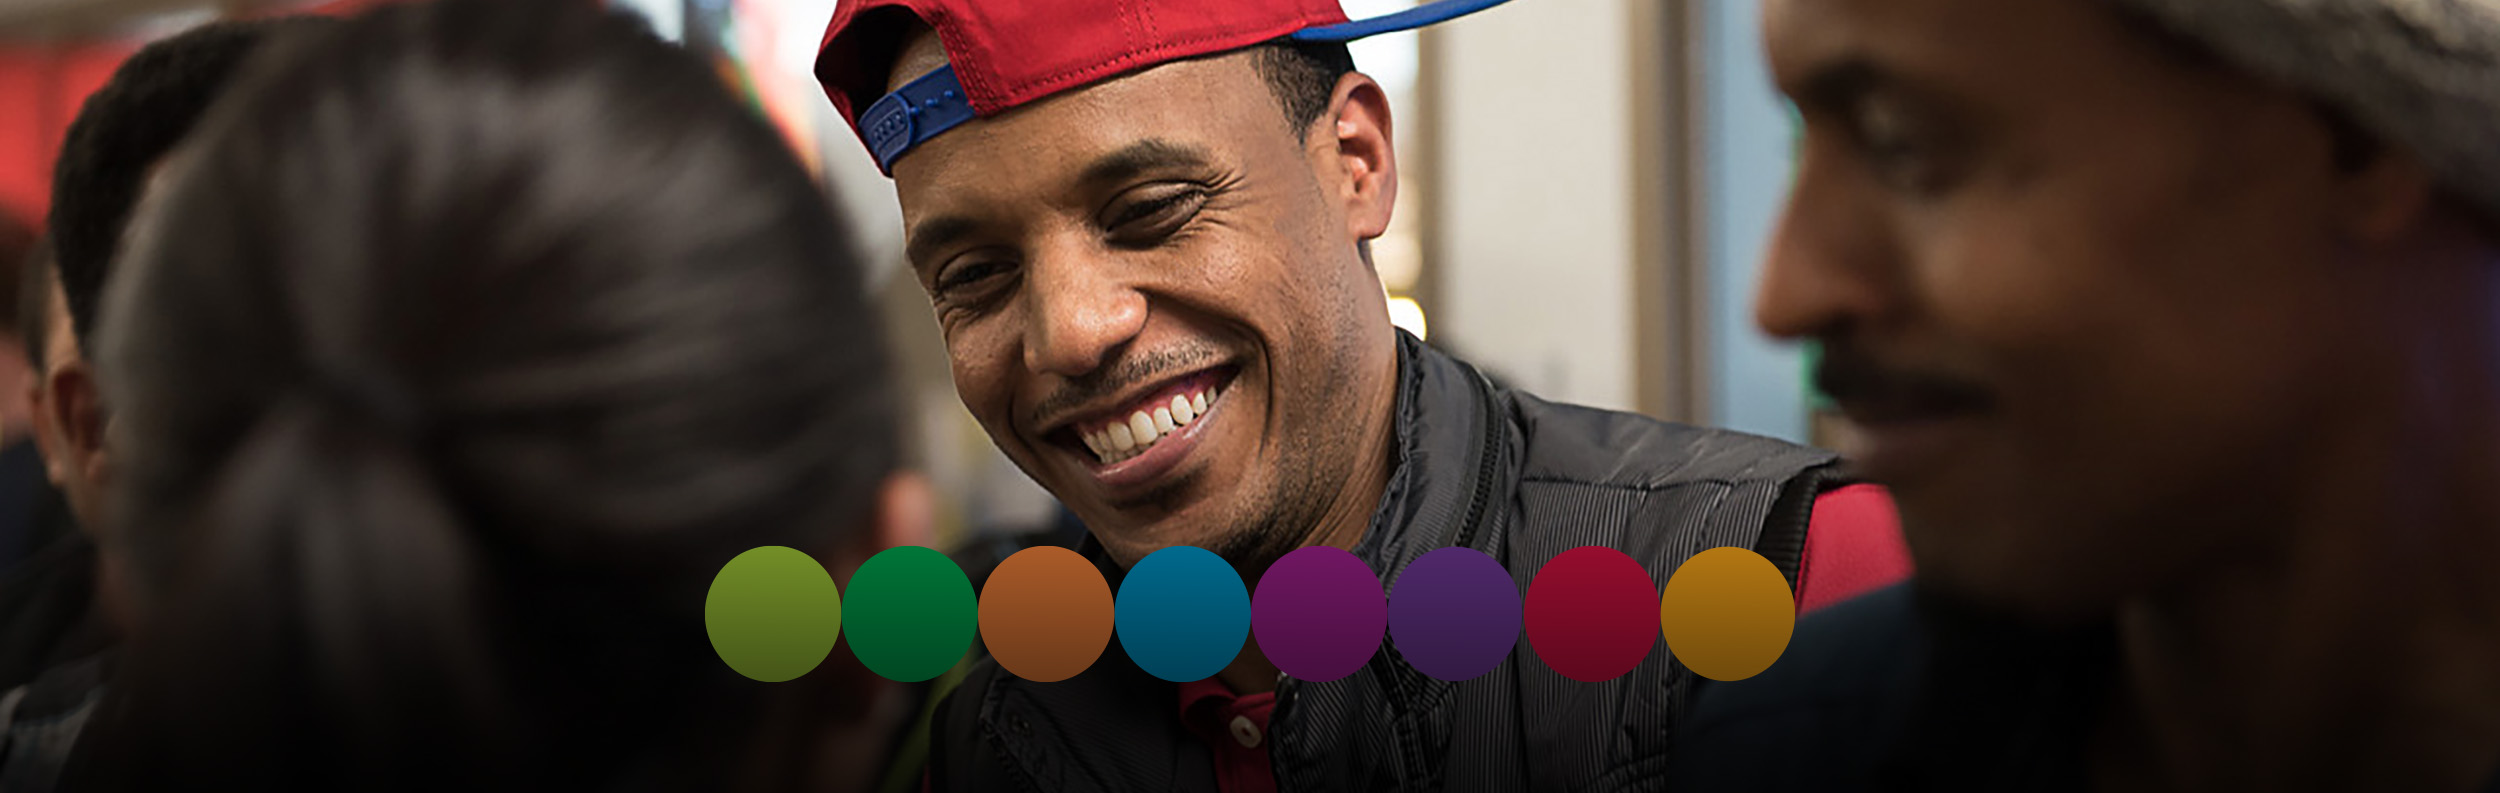 Photo of student smiling wearing a red baseball cap backwards 